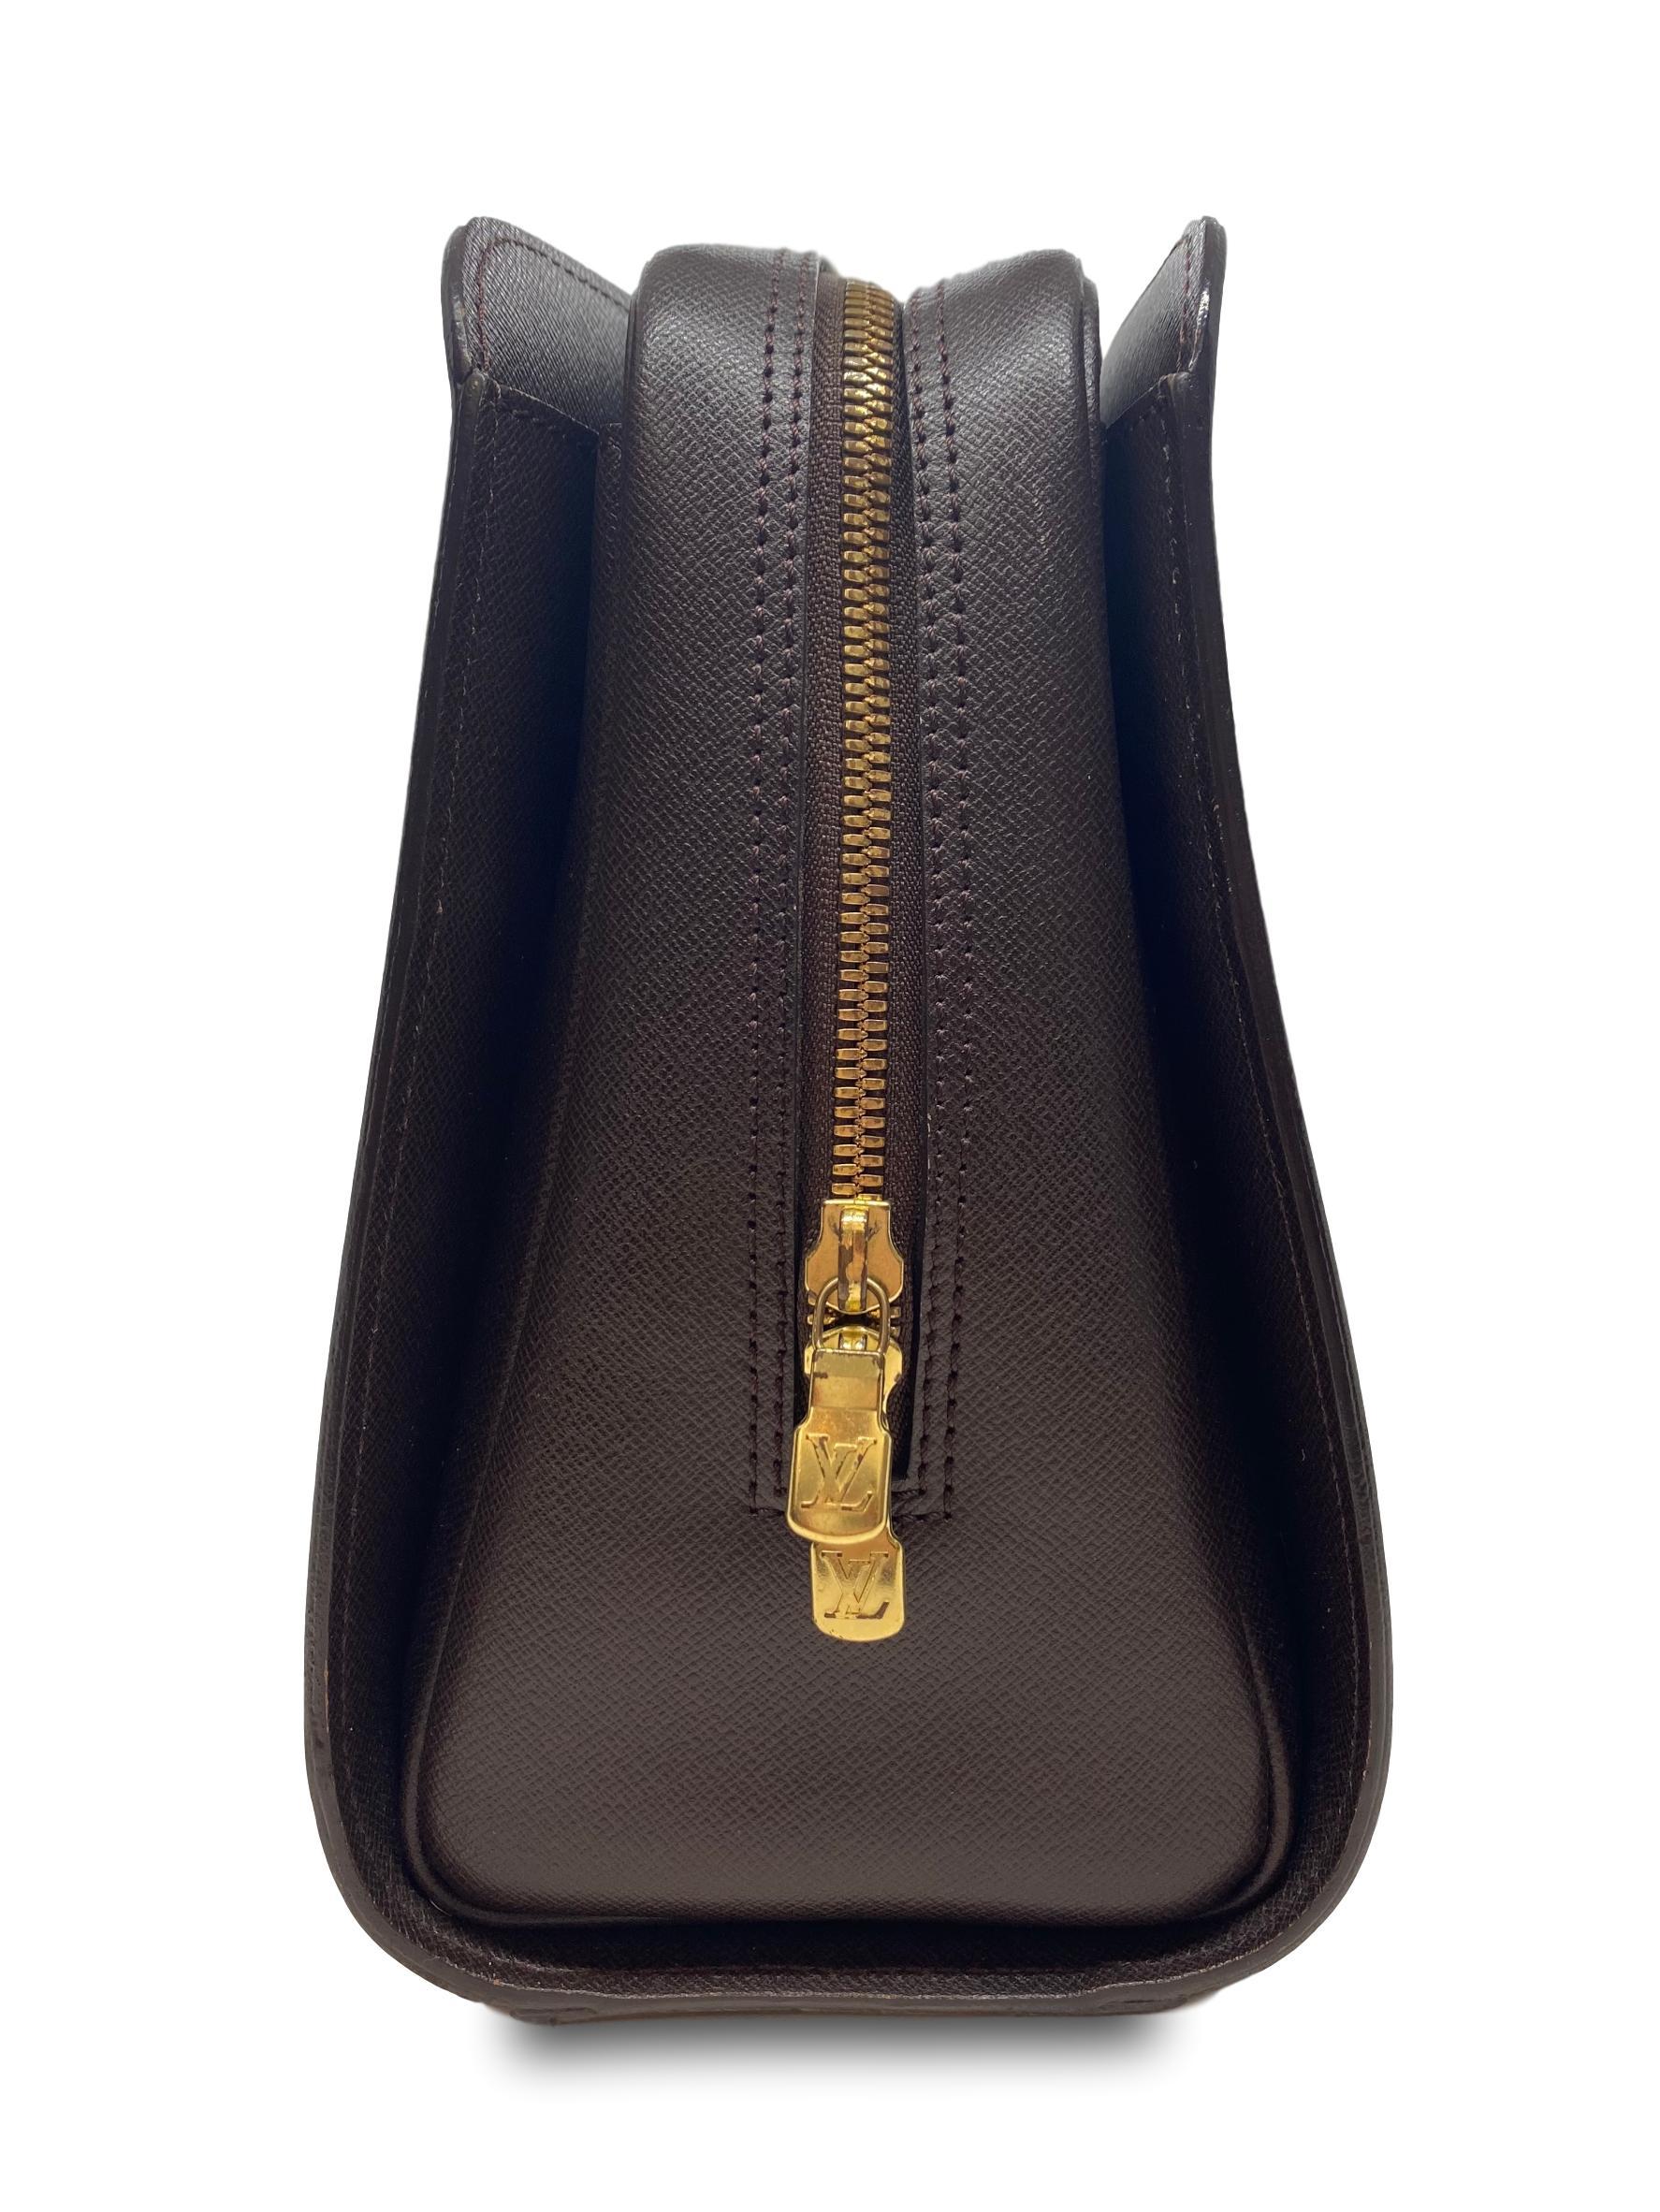 Black Louis Vuitton Triana Top Handle Handbag in Brown Damier Ebene, France 2000.